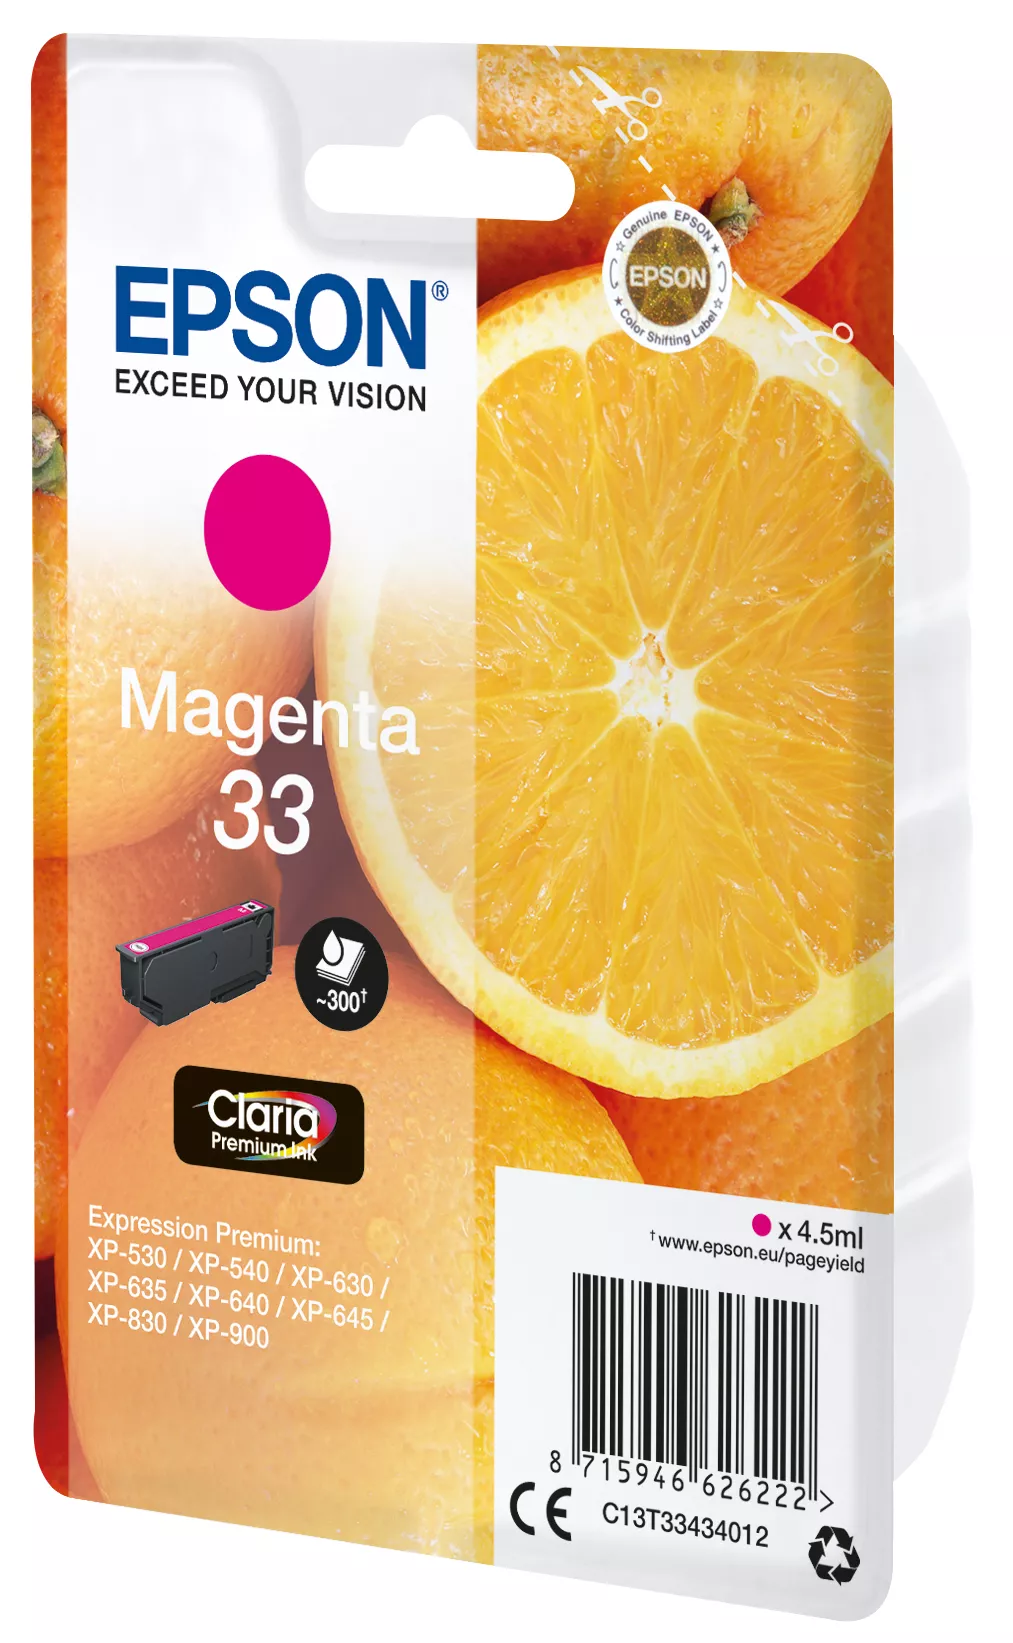 Vente EPSON Cartouche Oranges Encre Claria Premium Magenta Epson au meilleur prix - visuel 2